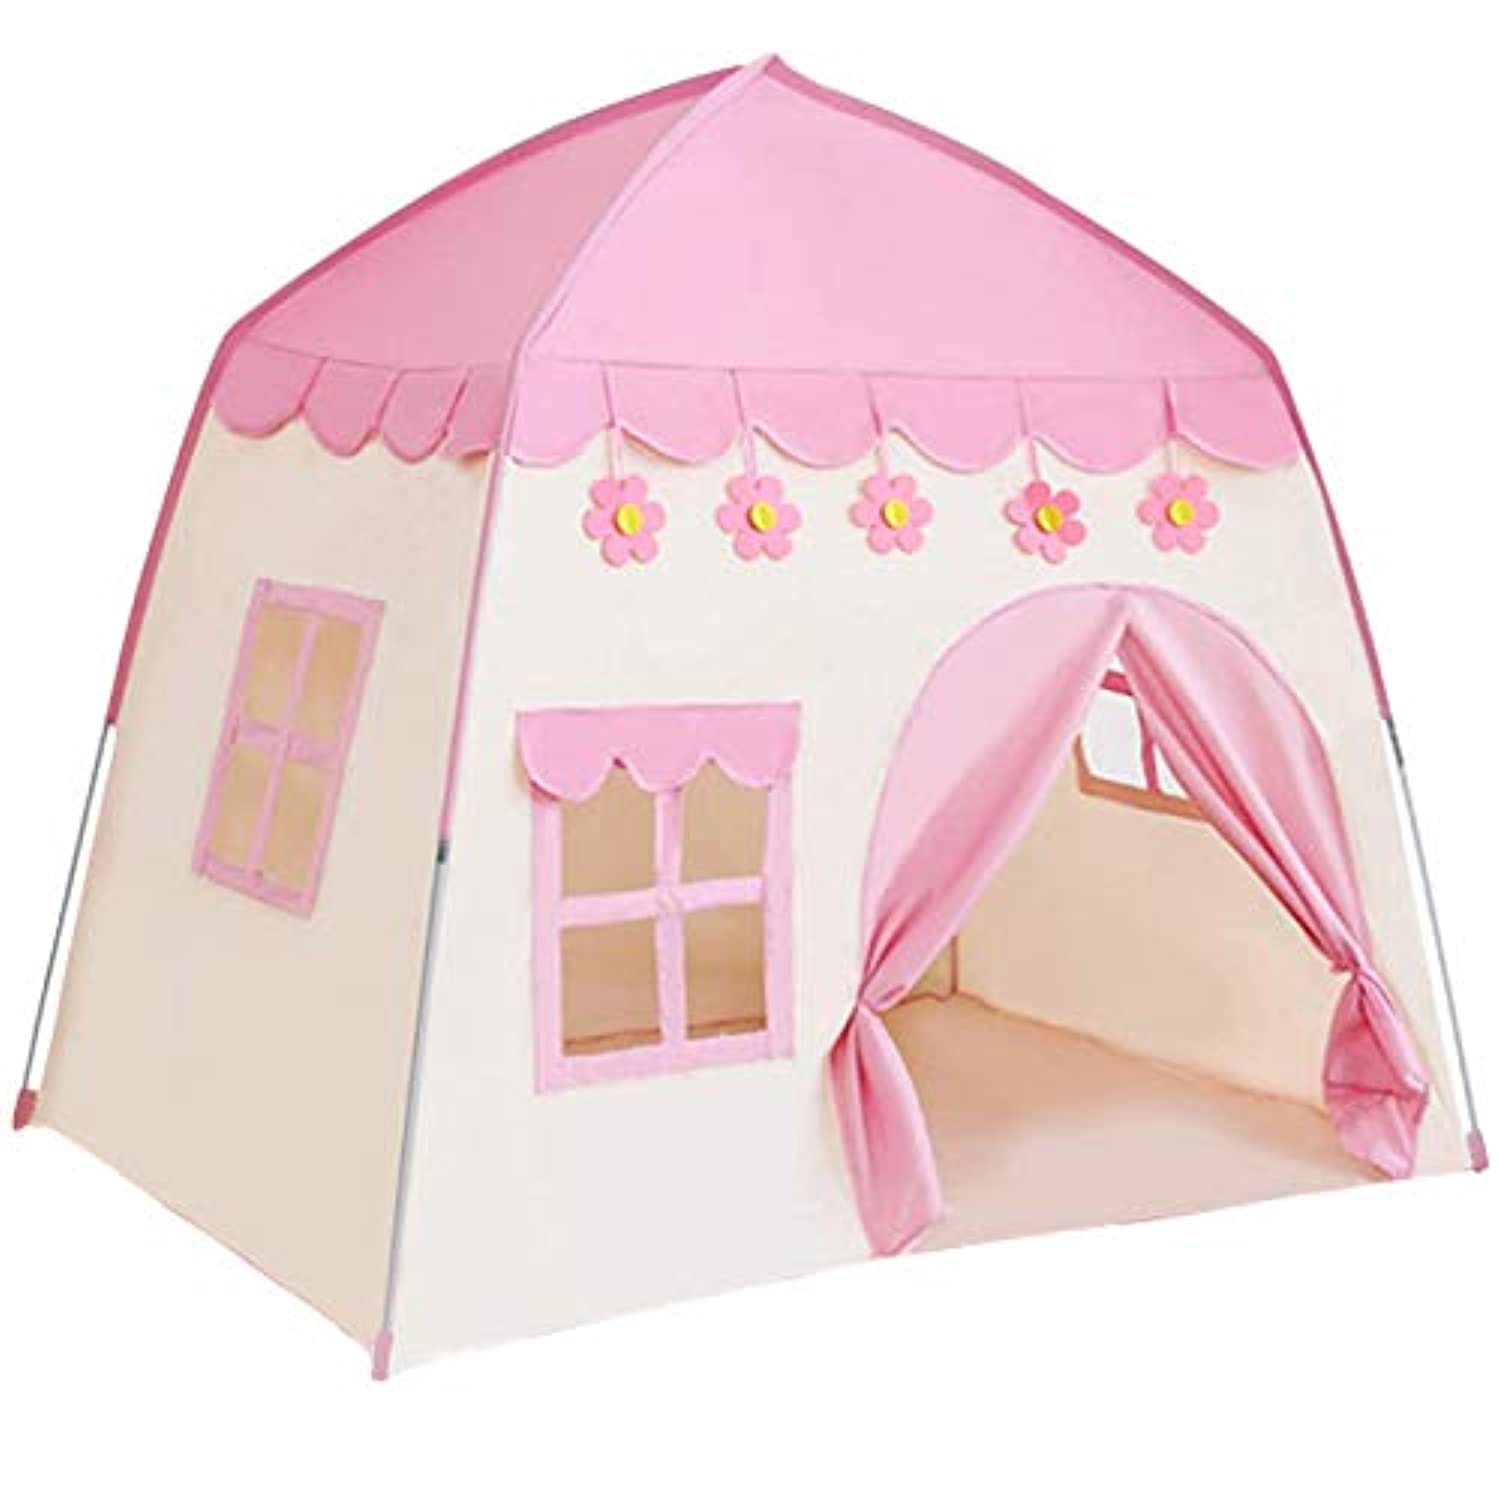 Kids Teepee Play Tent Princess Castle Children House Indoor Outdoor Playhouse Pink